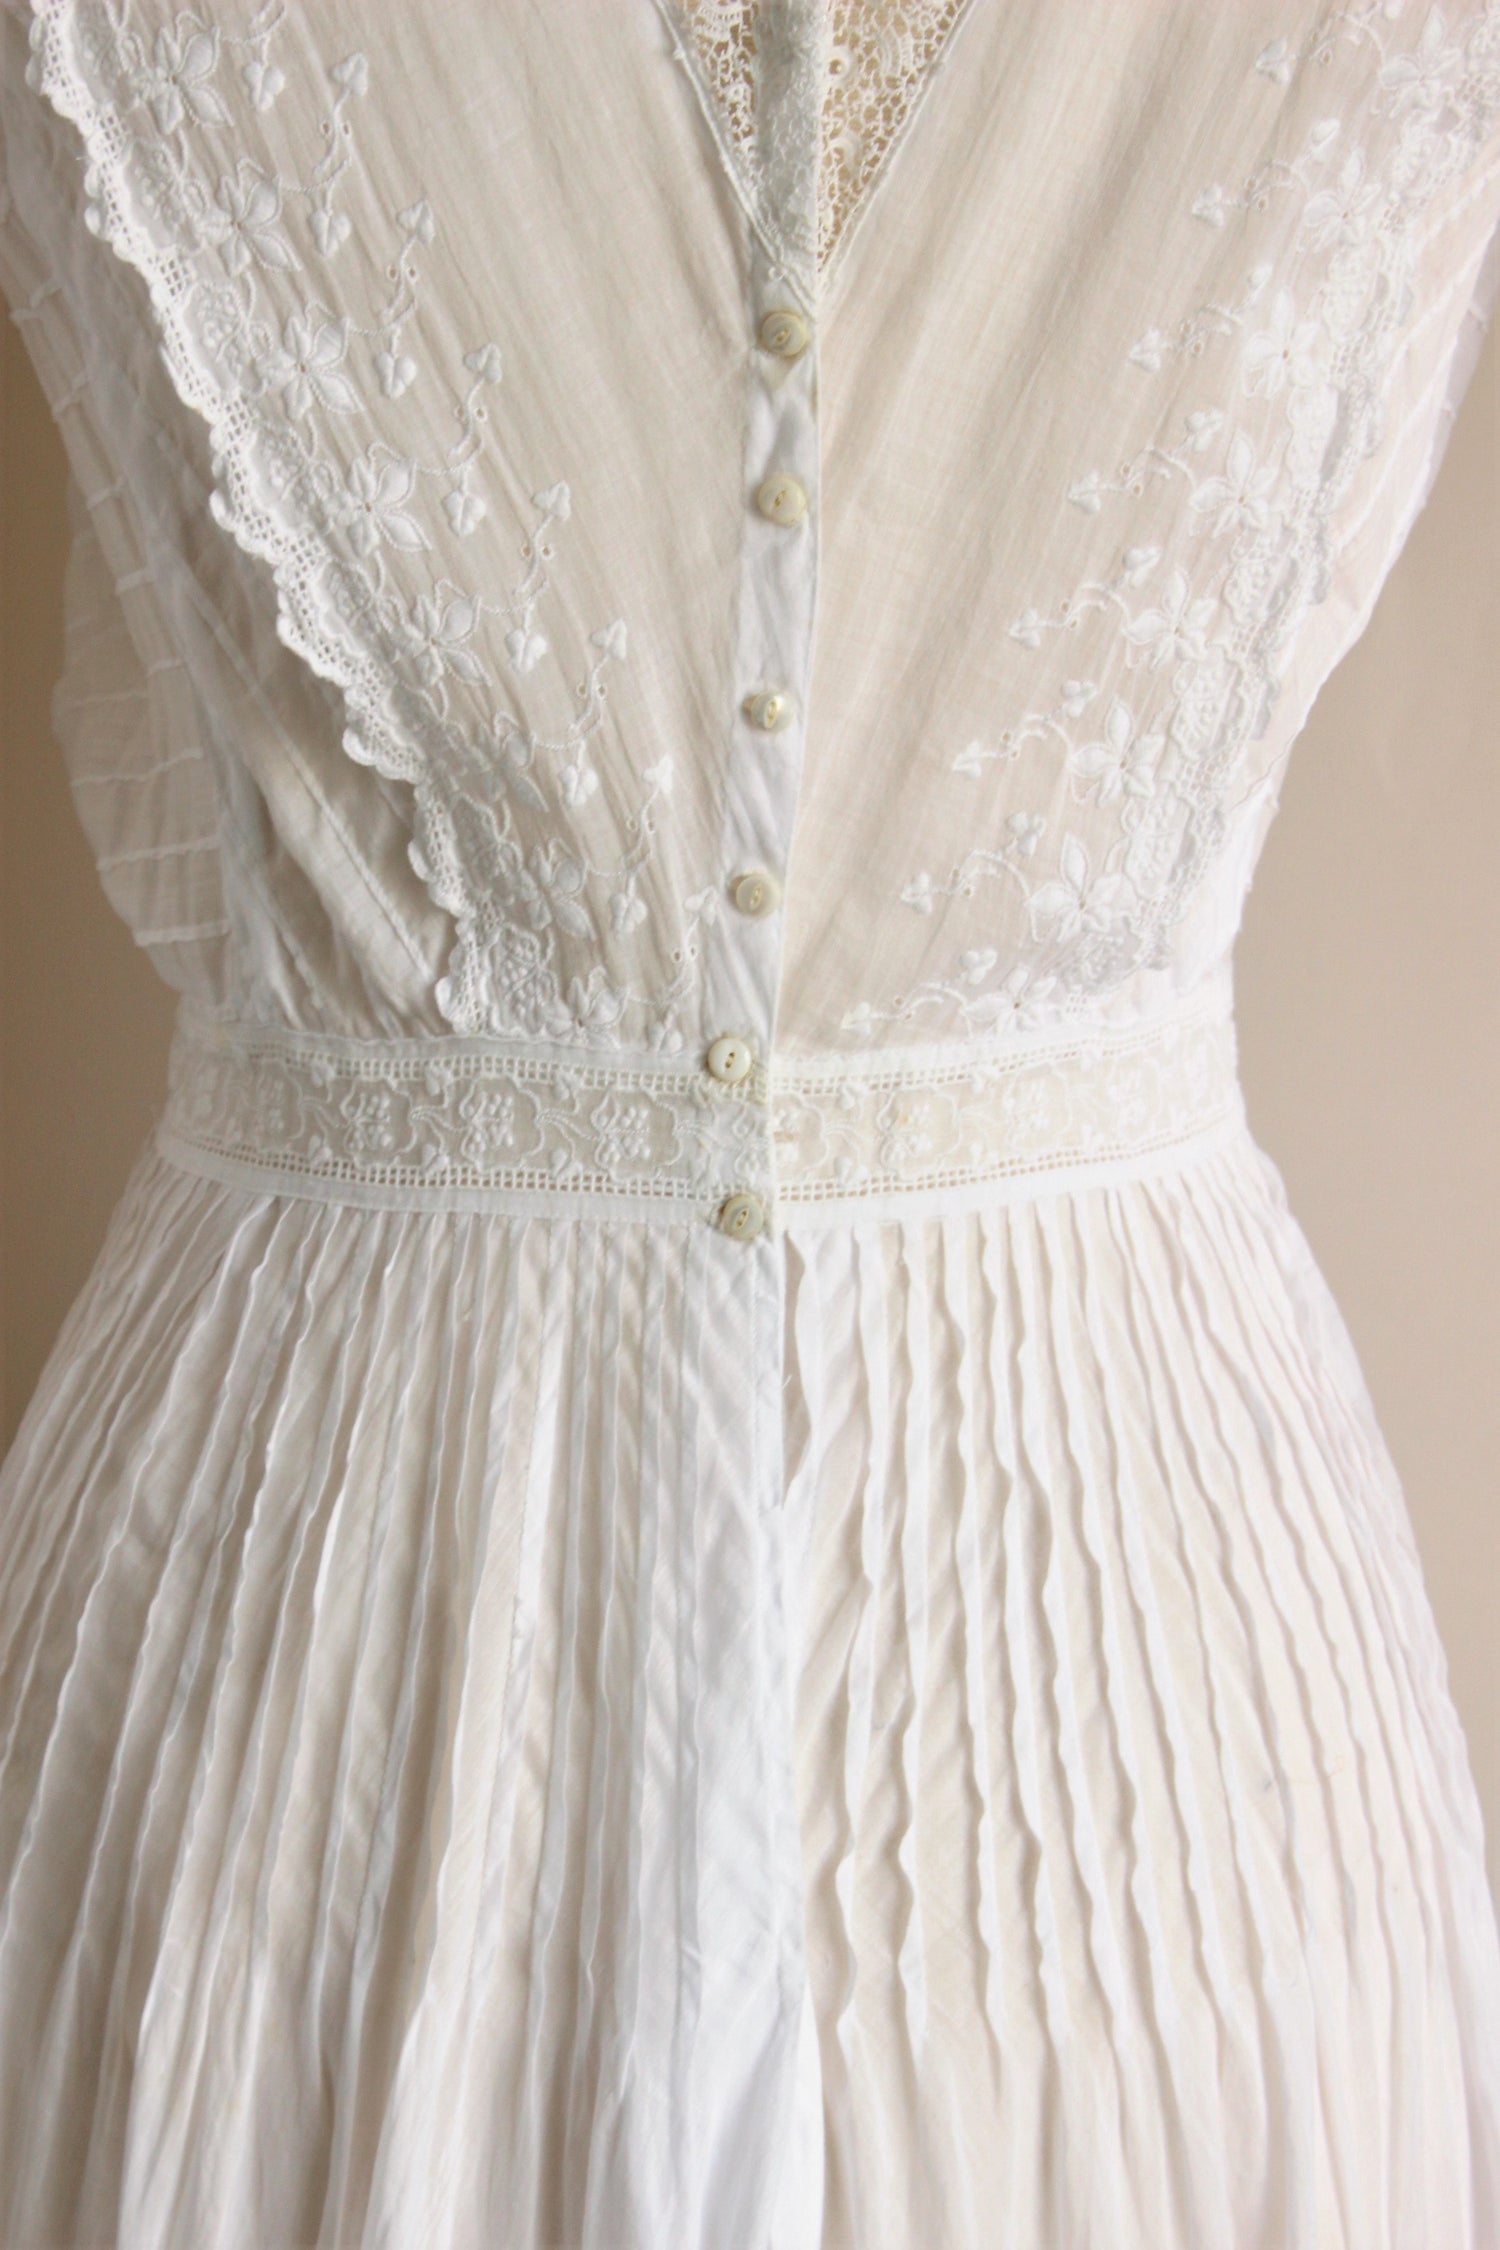 Antique Edwardian White Dress, "THE" Dress